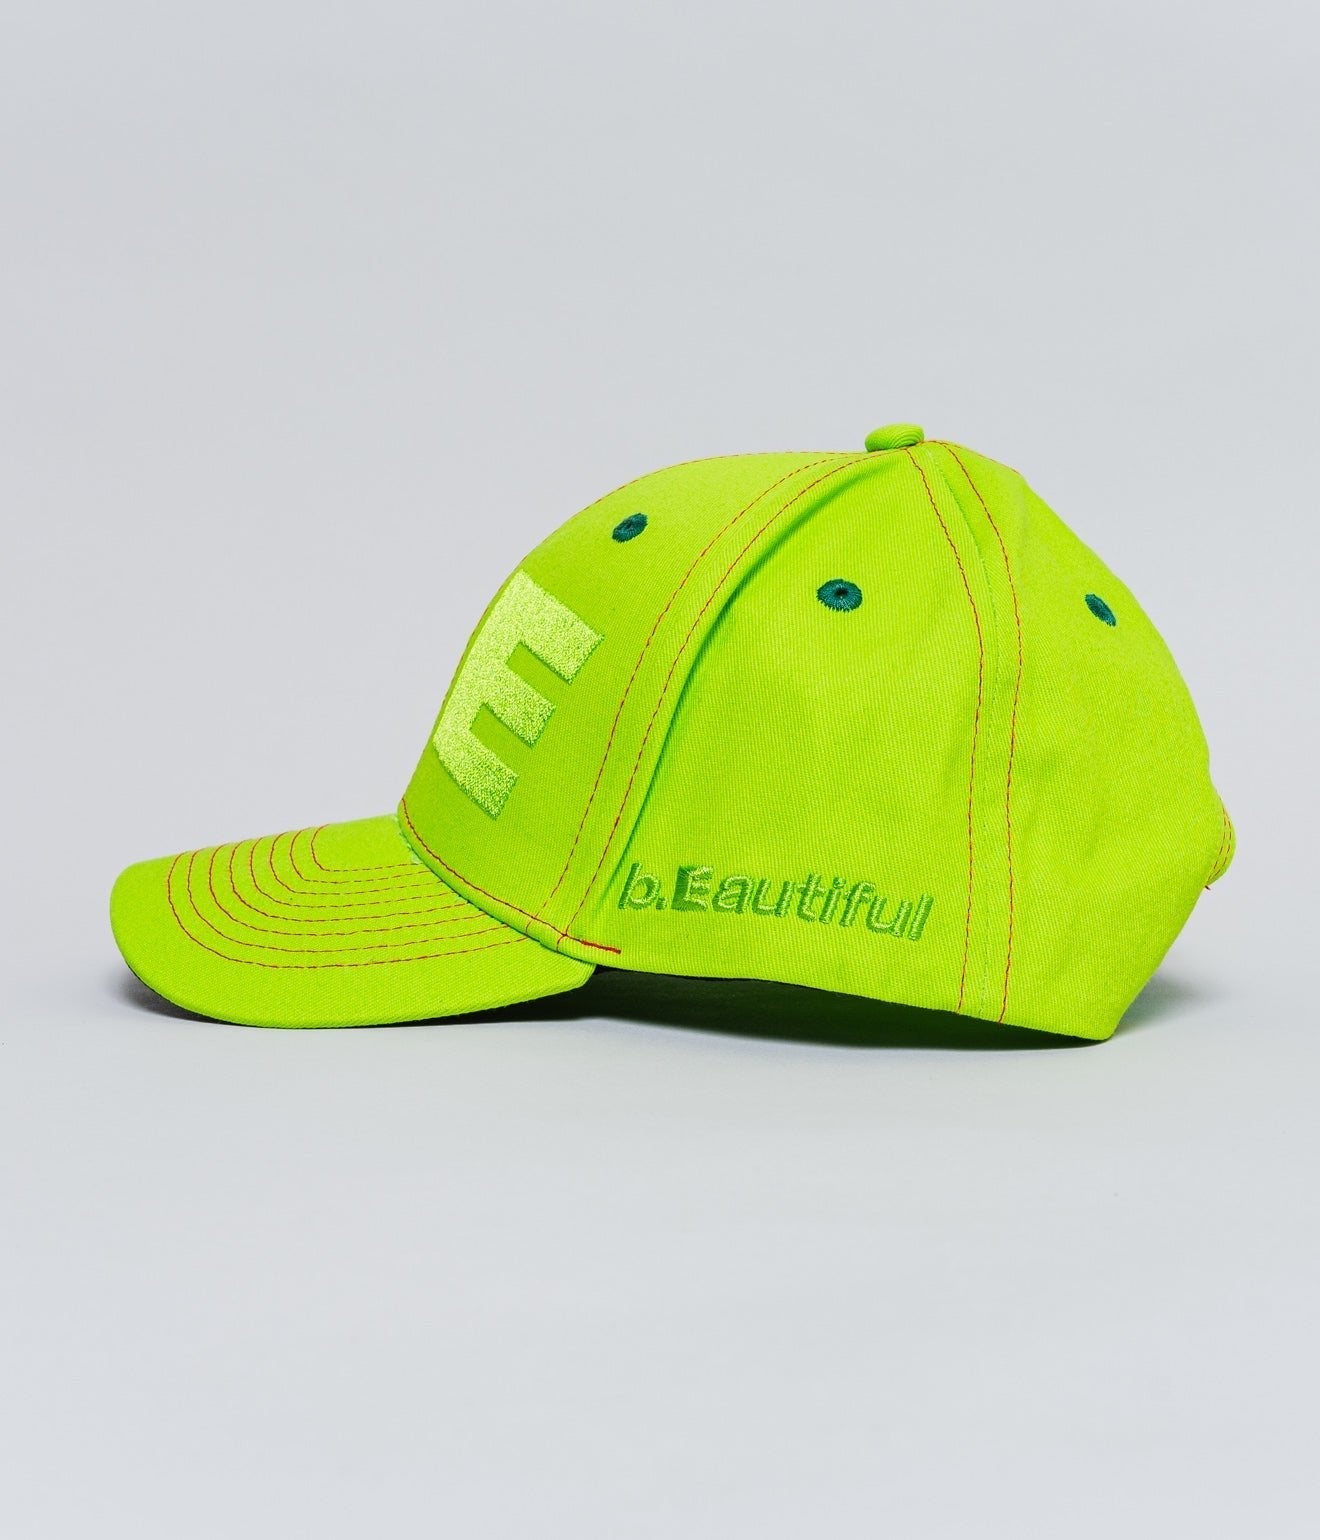 b.Eautiful "b.E Hat" Lime / Lime - WEAREALLANIMALS